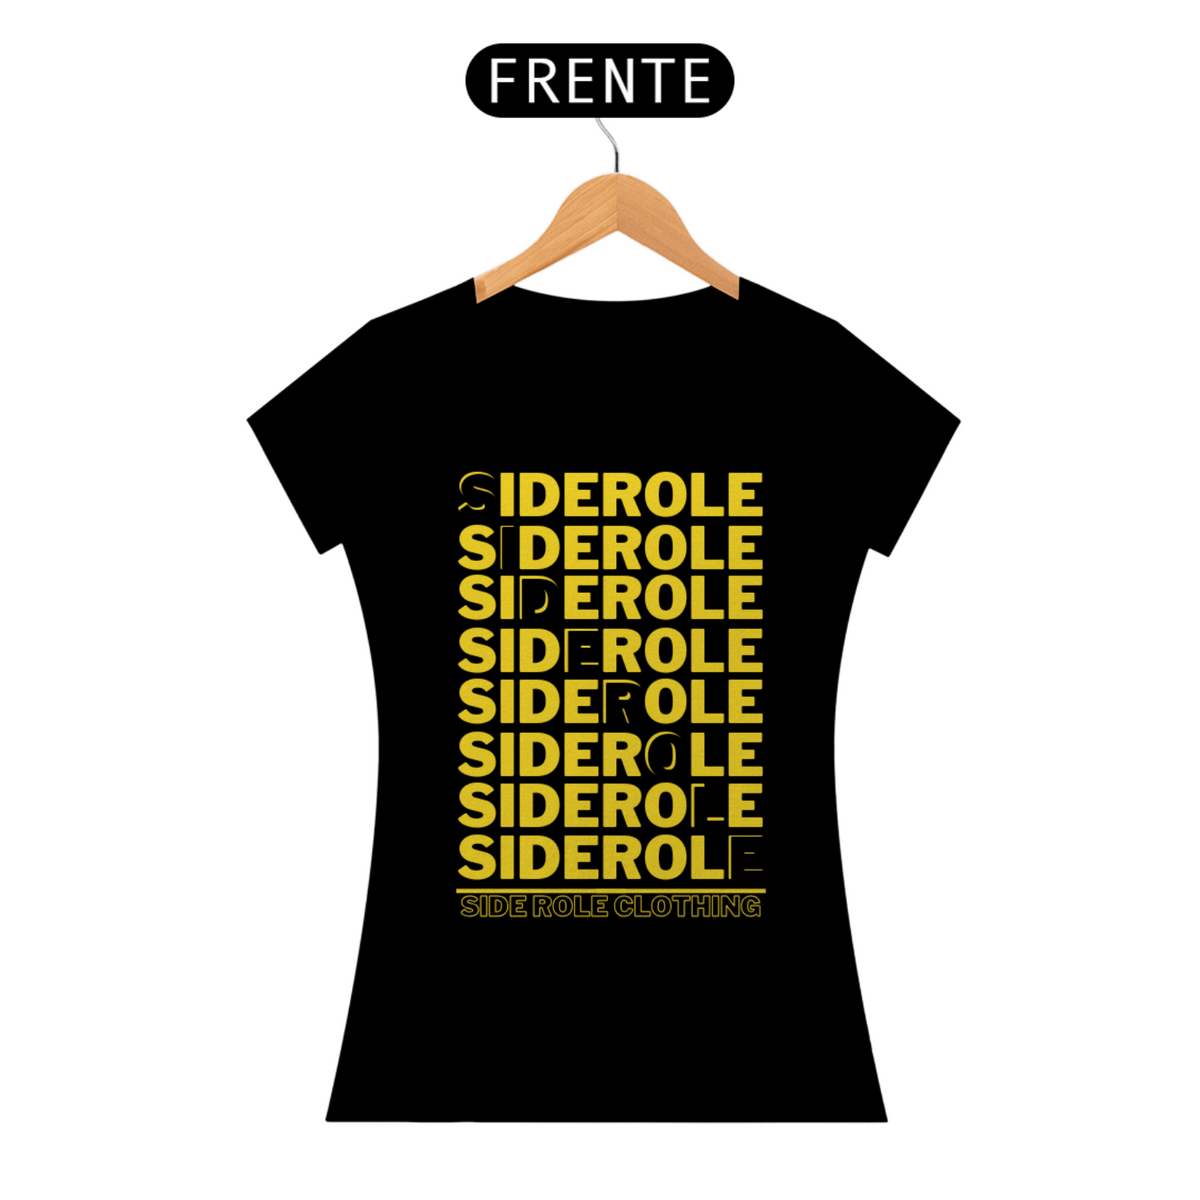 Nome do produto: Camiseta Side Role Clothing Feminina